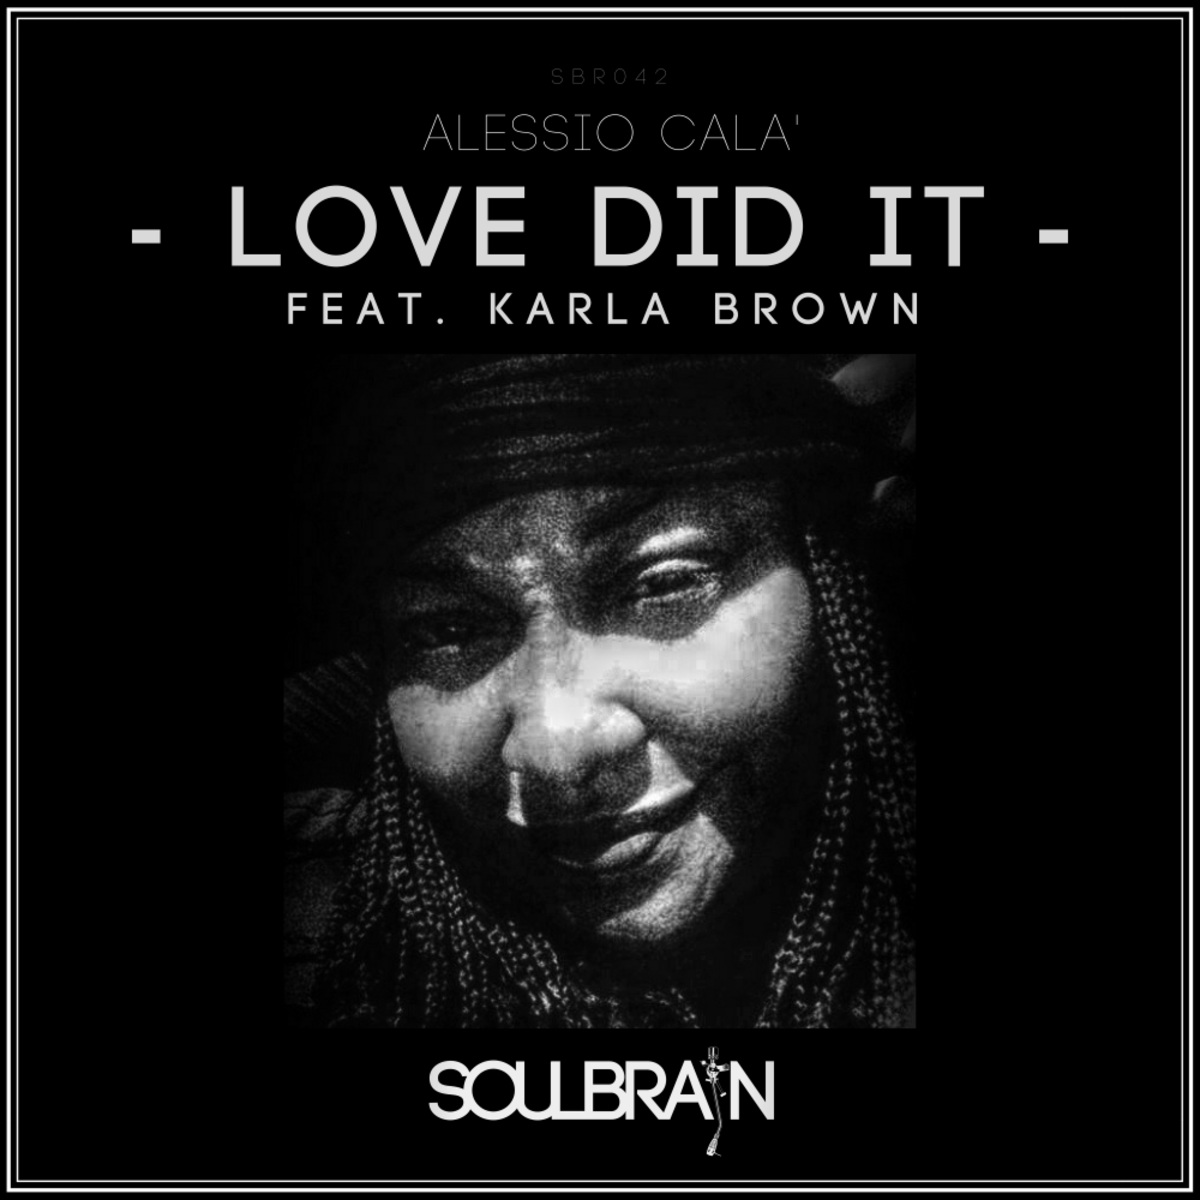 Alessio Cala' ft Karla Brown - Love Did It / Soul Brain Records